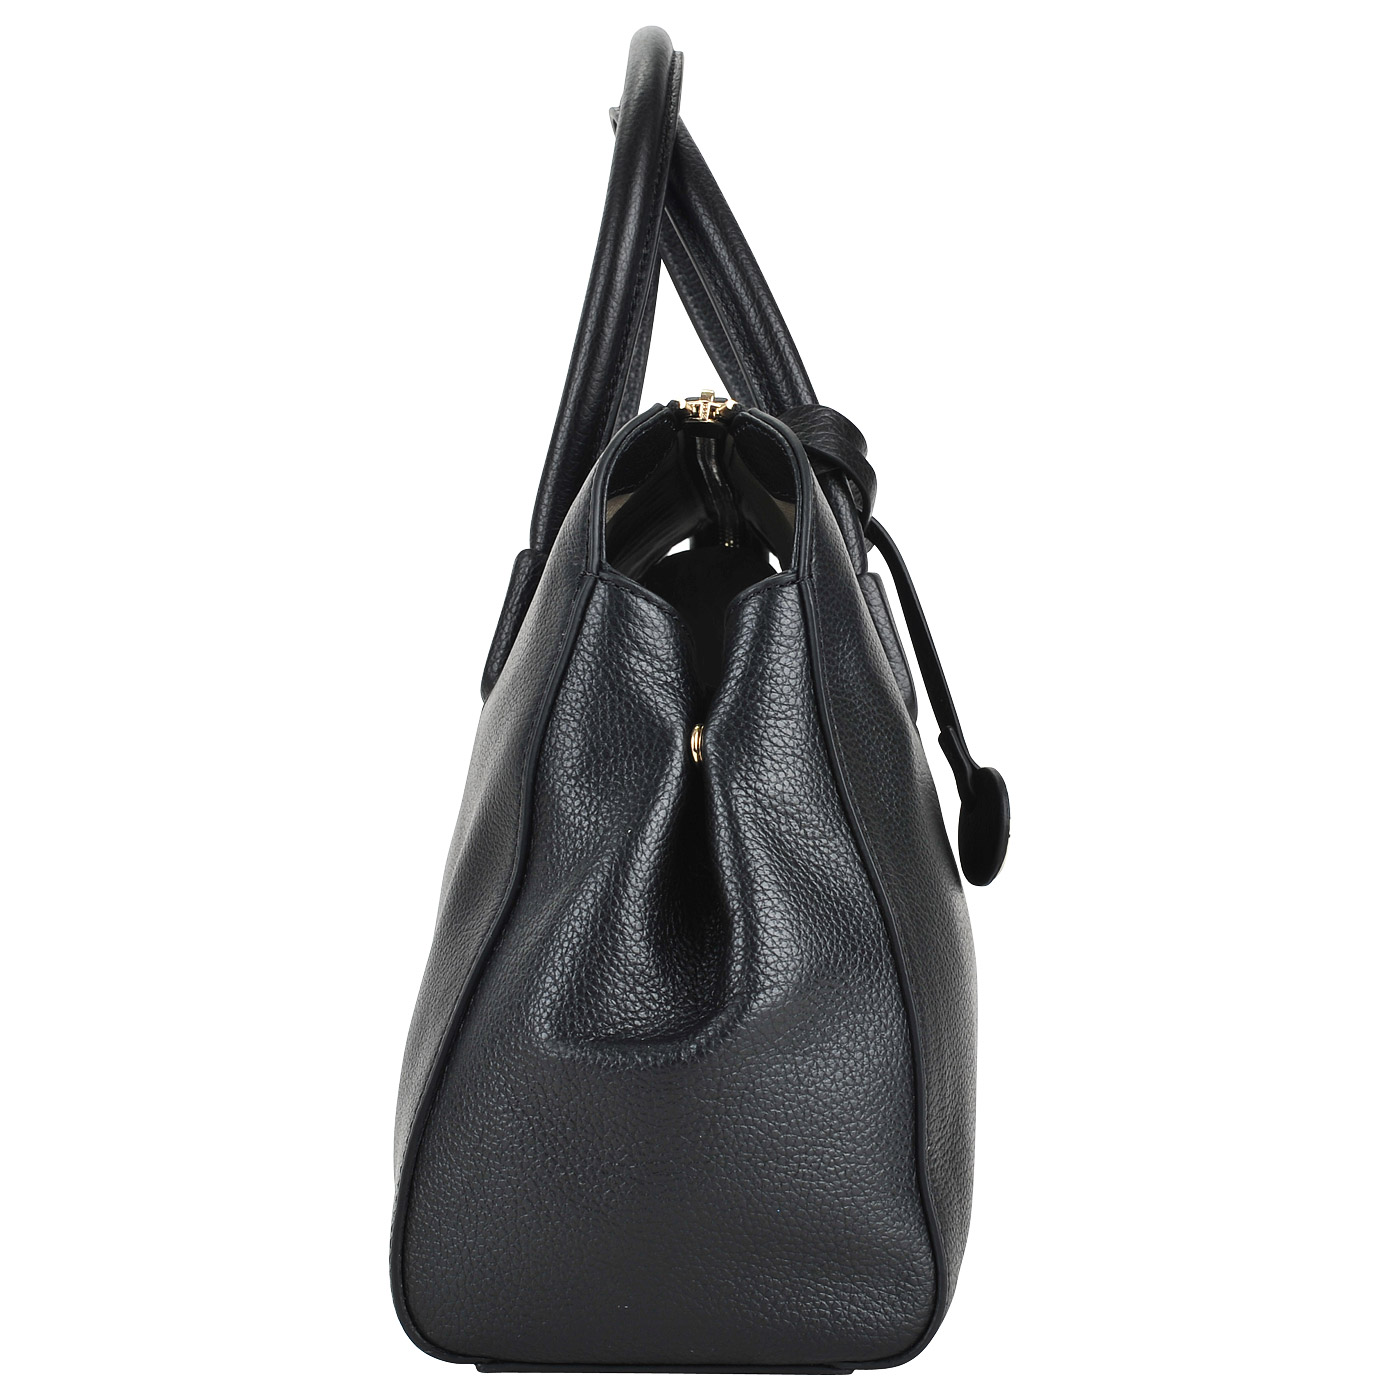 Женская кожаная сумка со съемным плечевым ремешком Coccinelle Clementine soft